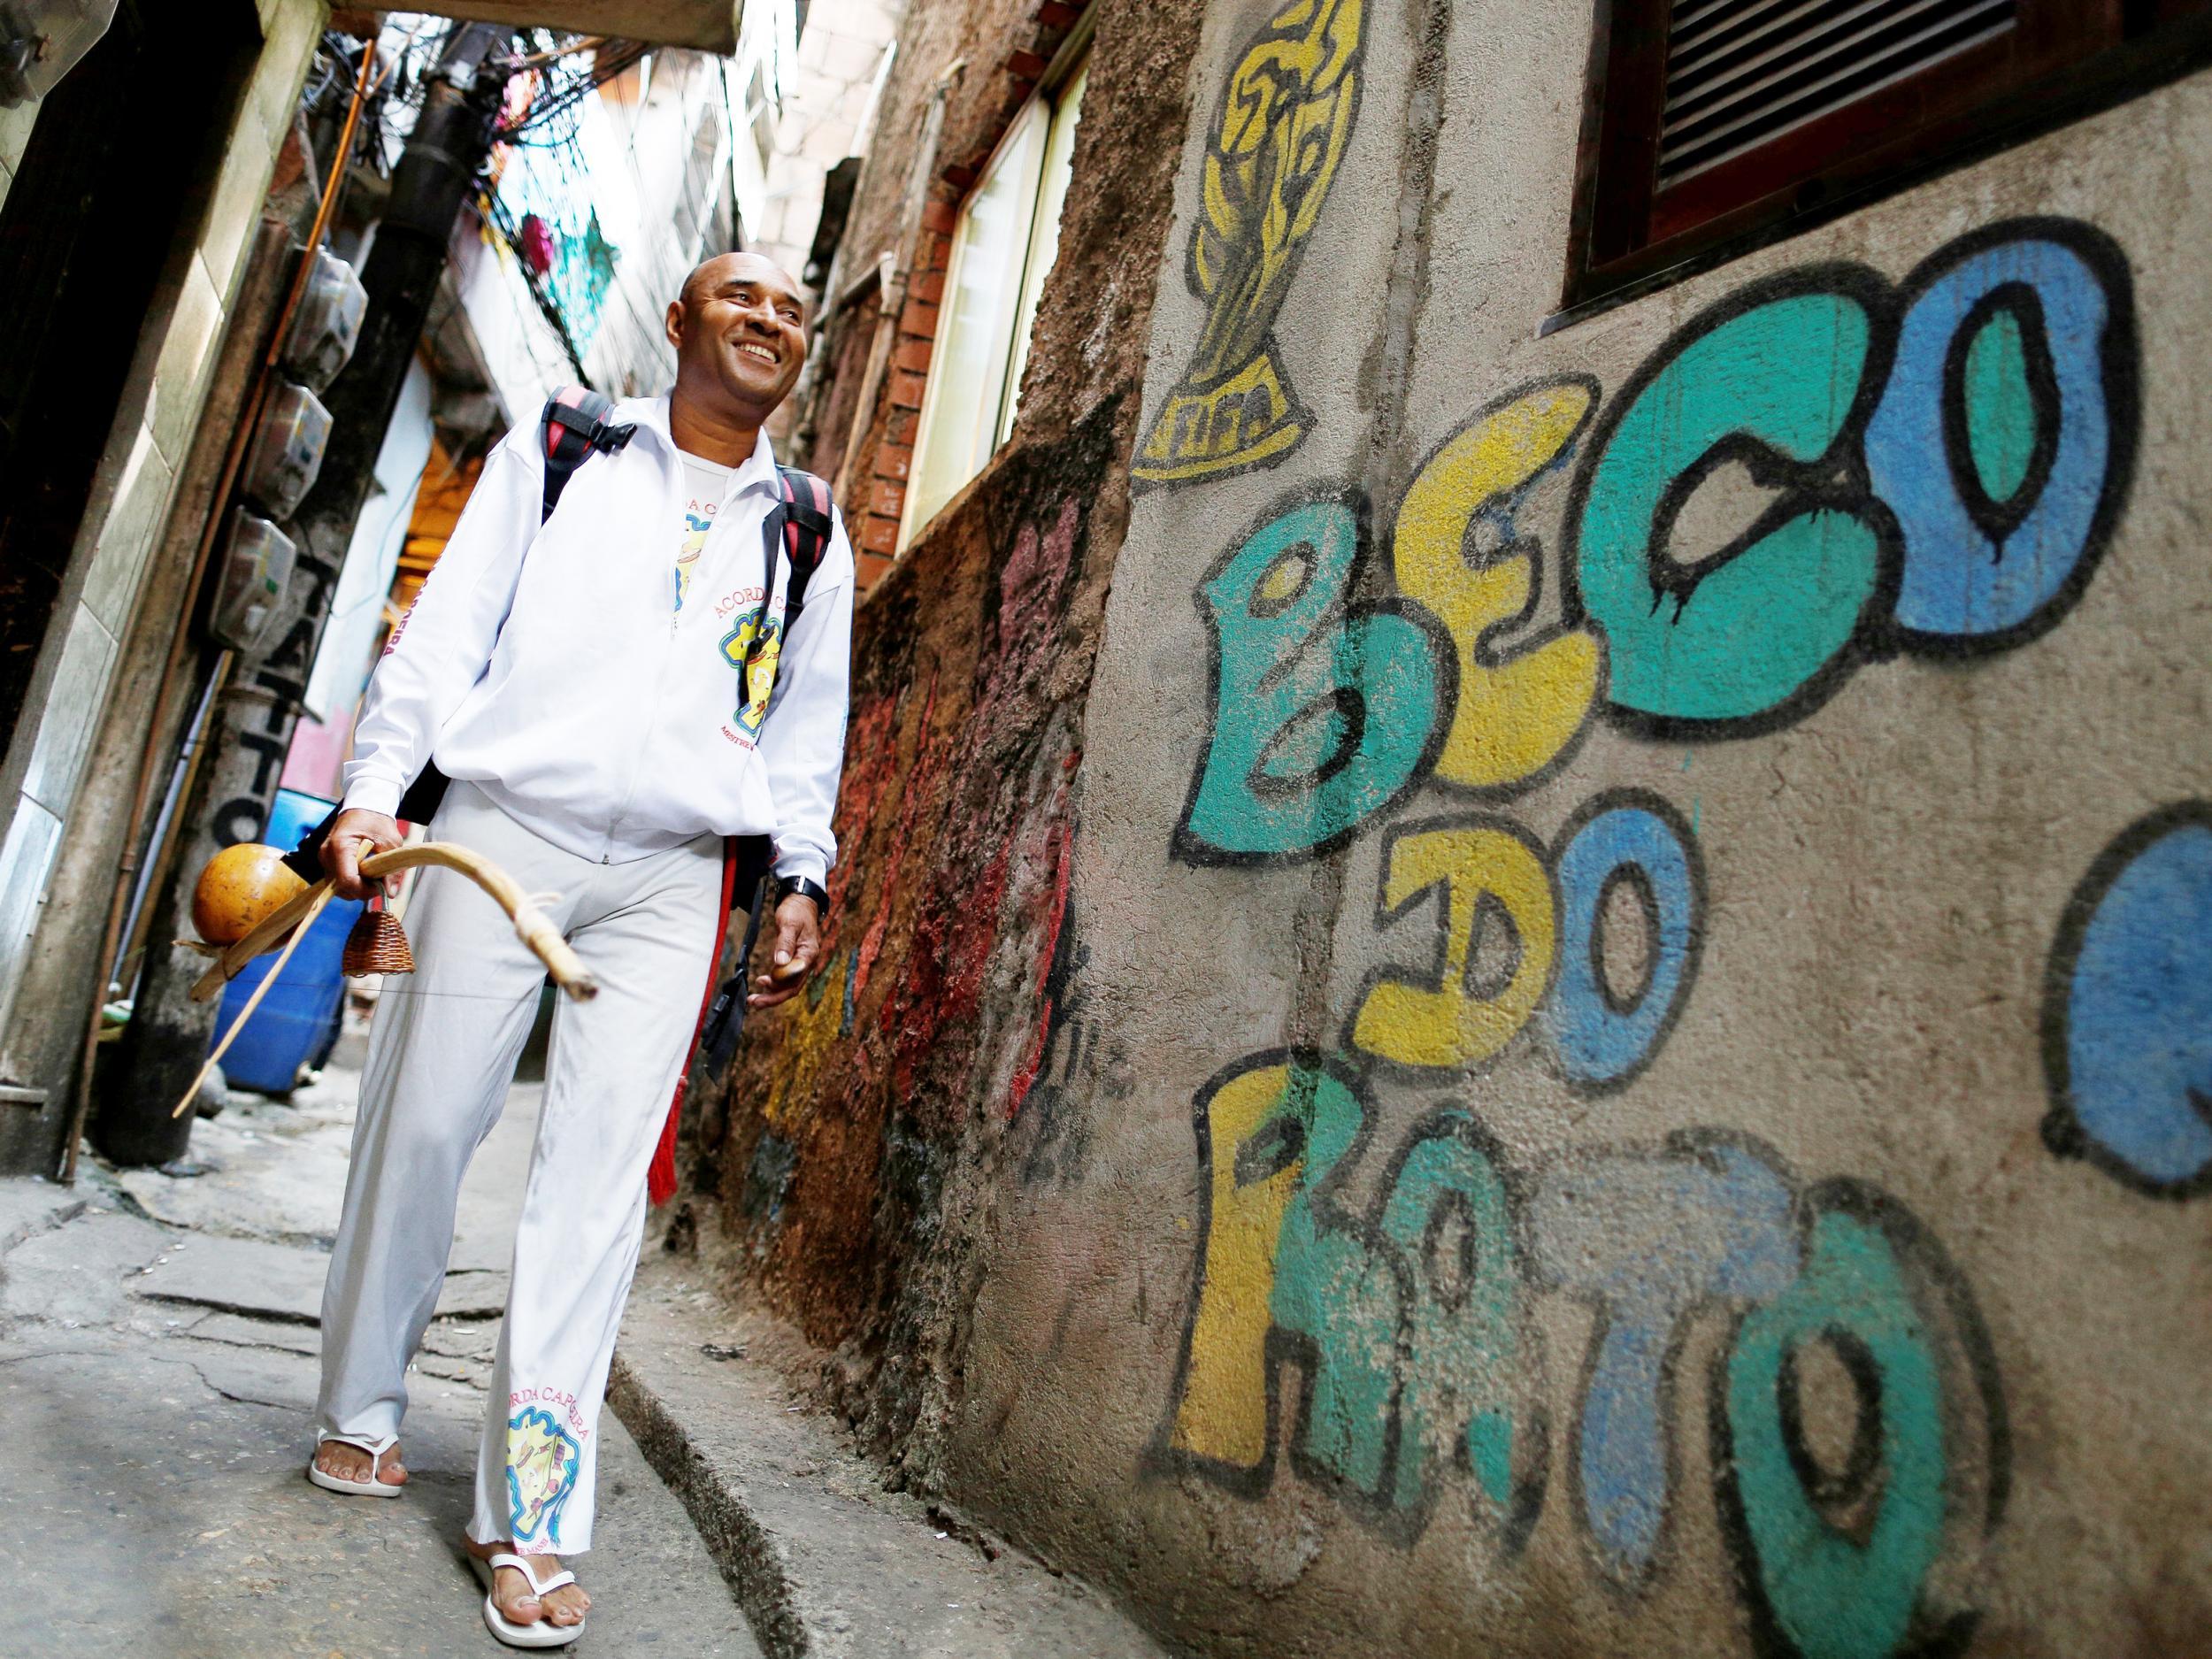 Manoel Pereira Costa, known as "Master Manel", walks in the Rocinha favela